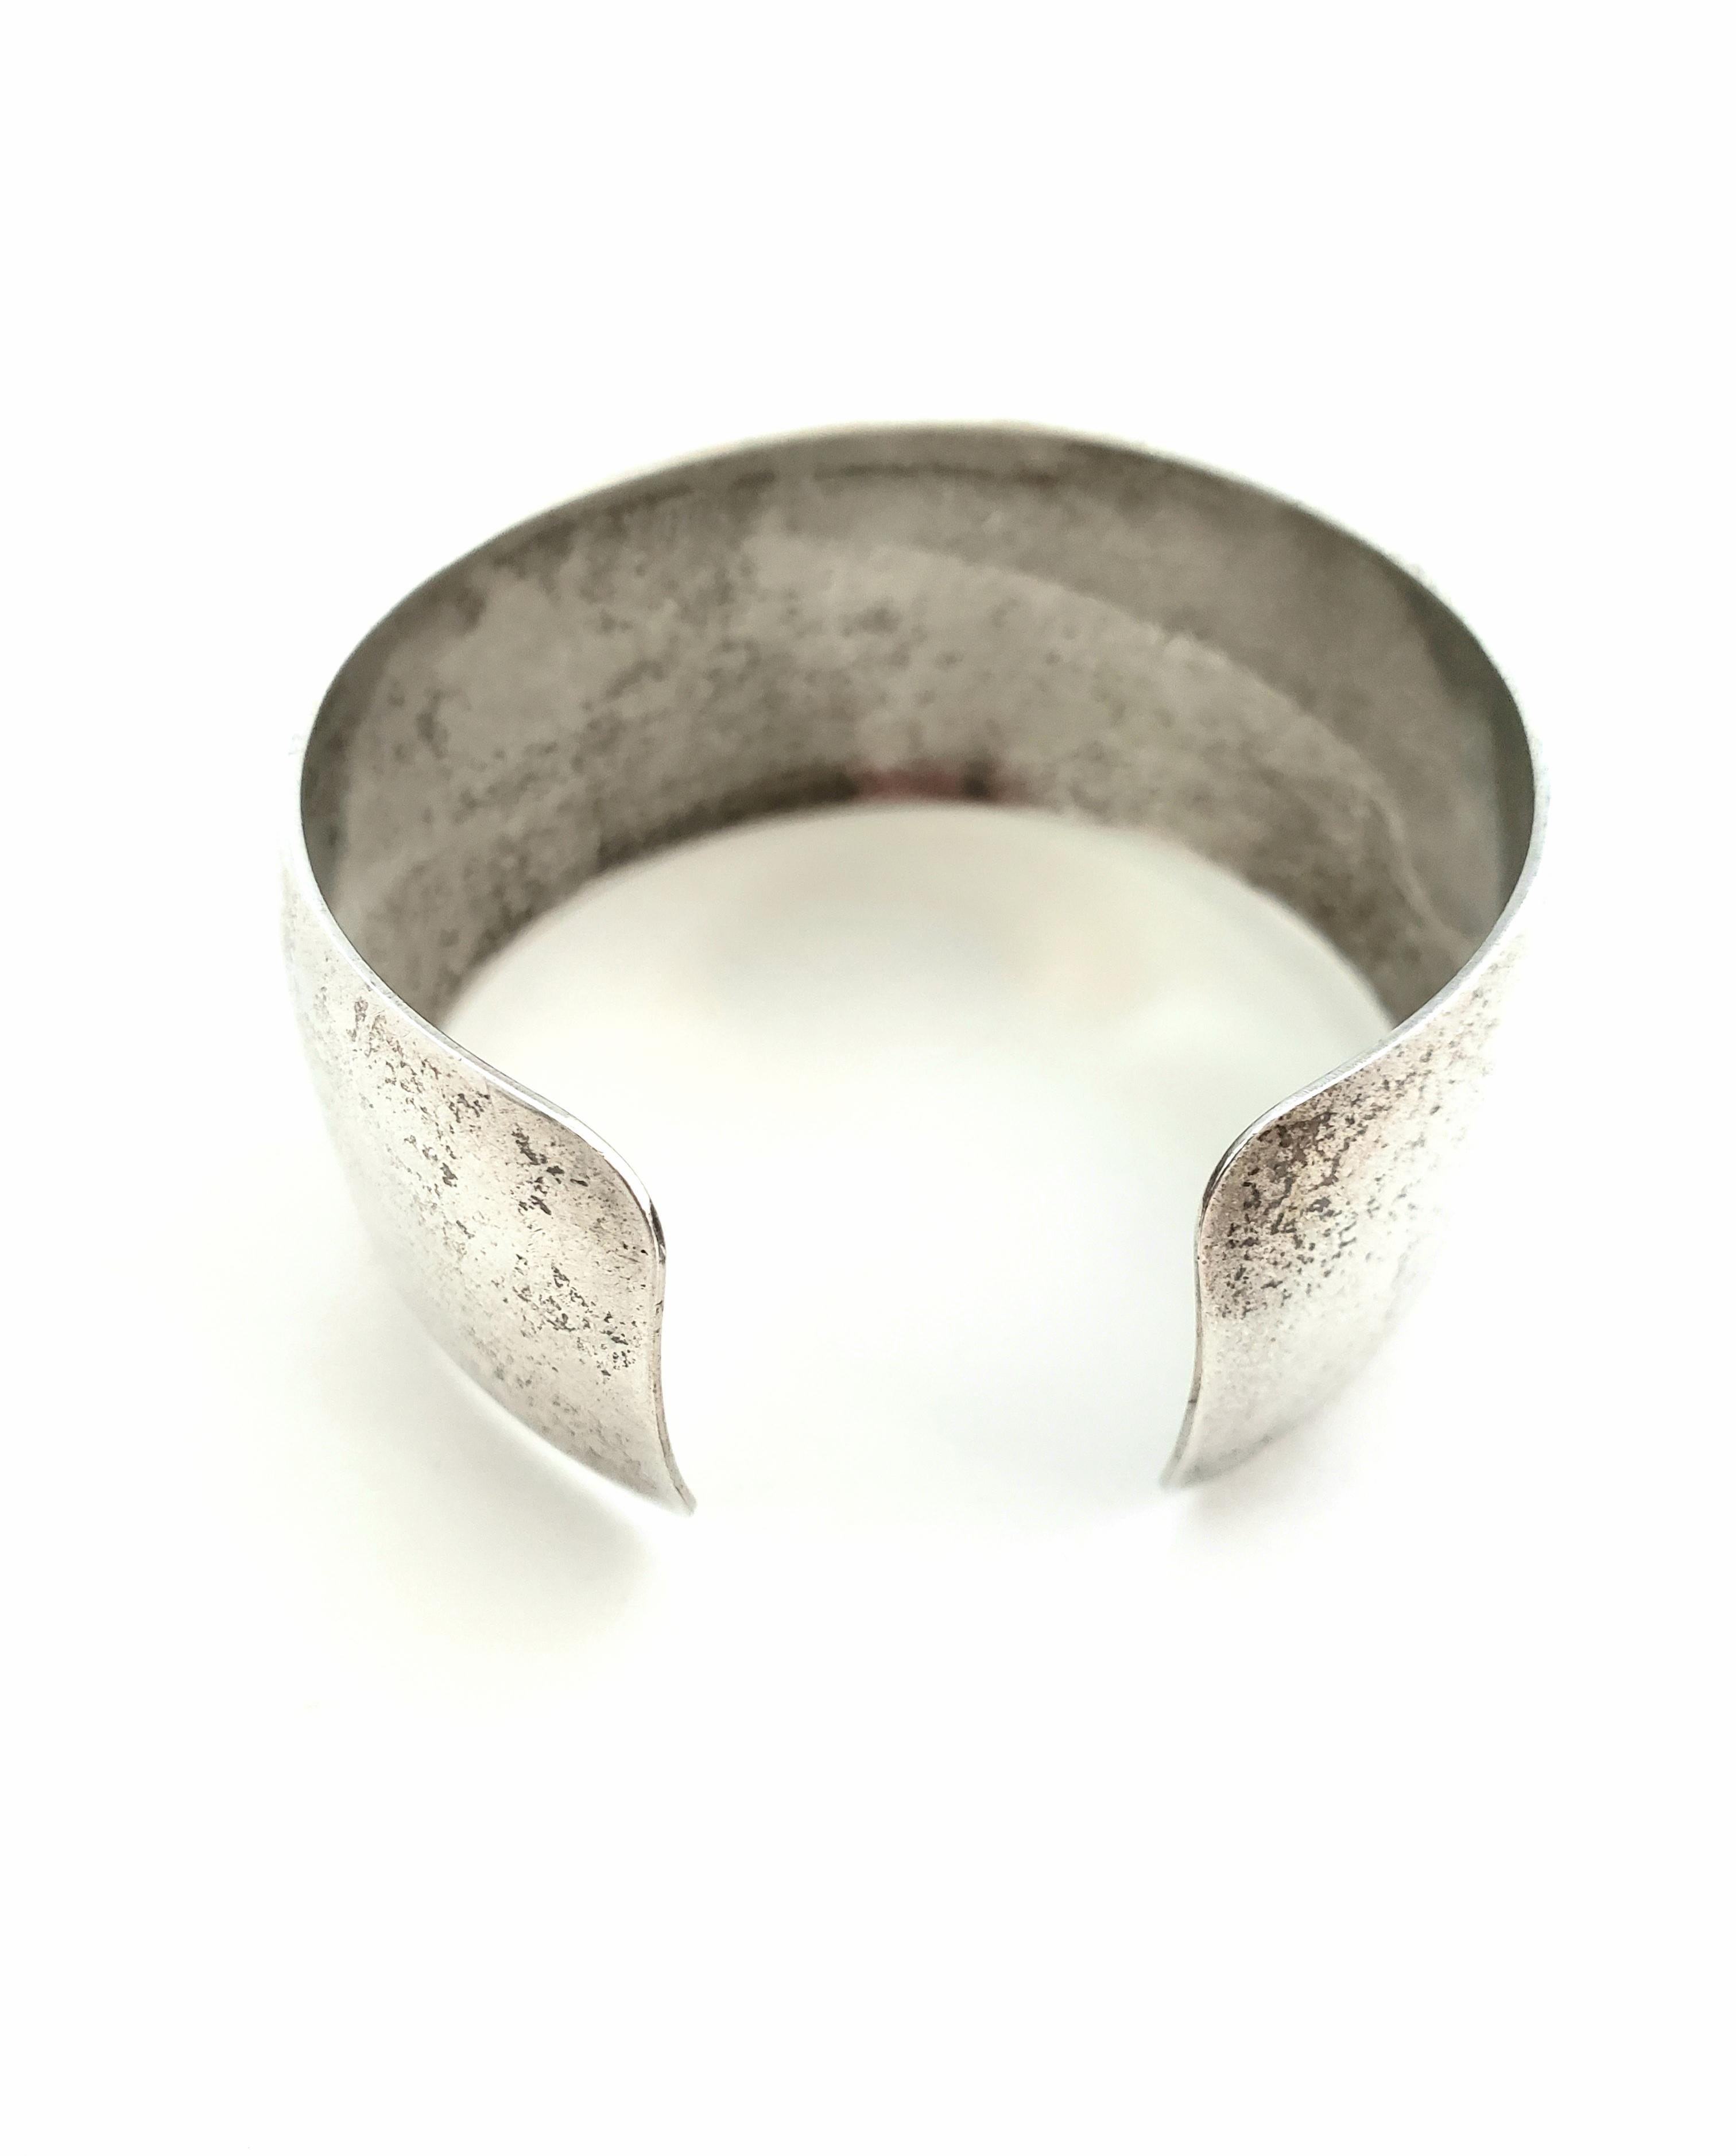 Inman Sterling Silver Modernist Cuff Bracelet 1